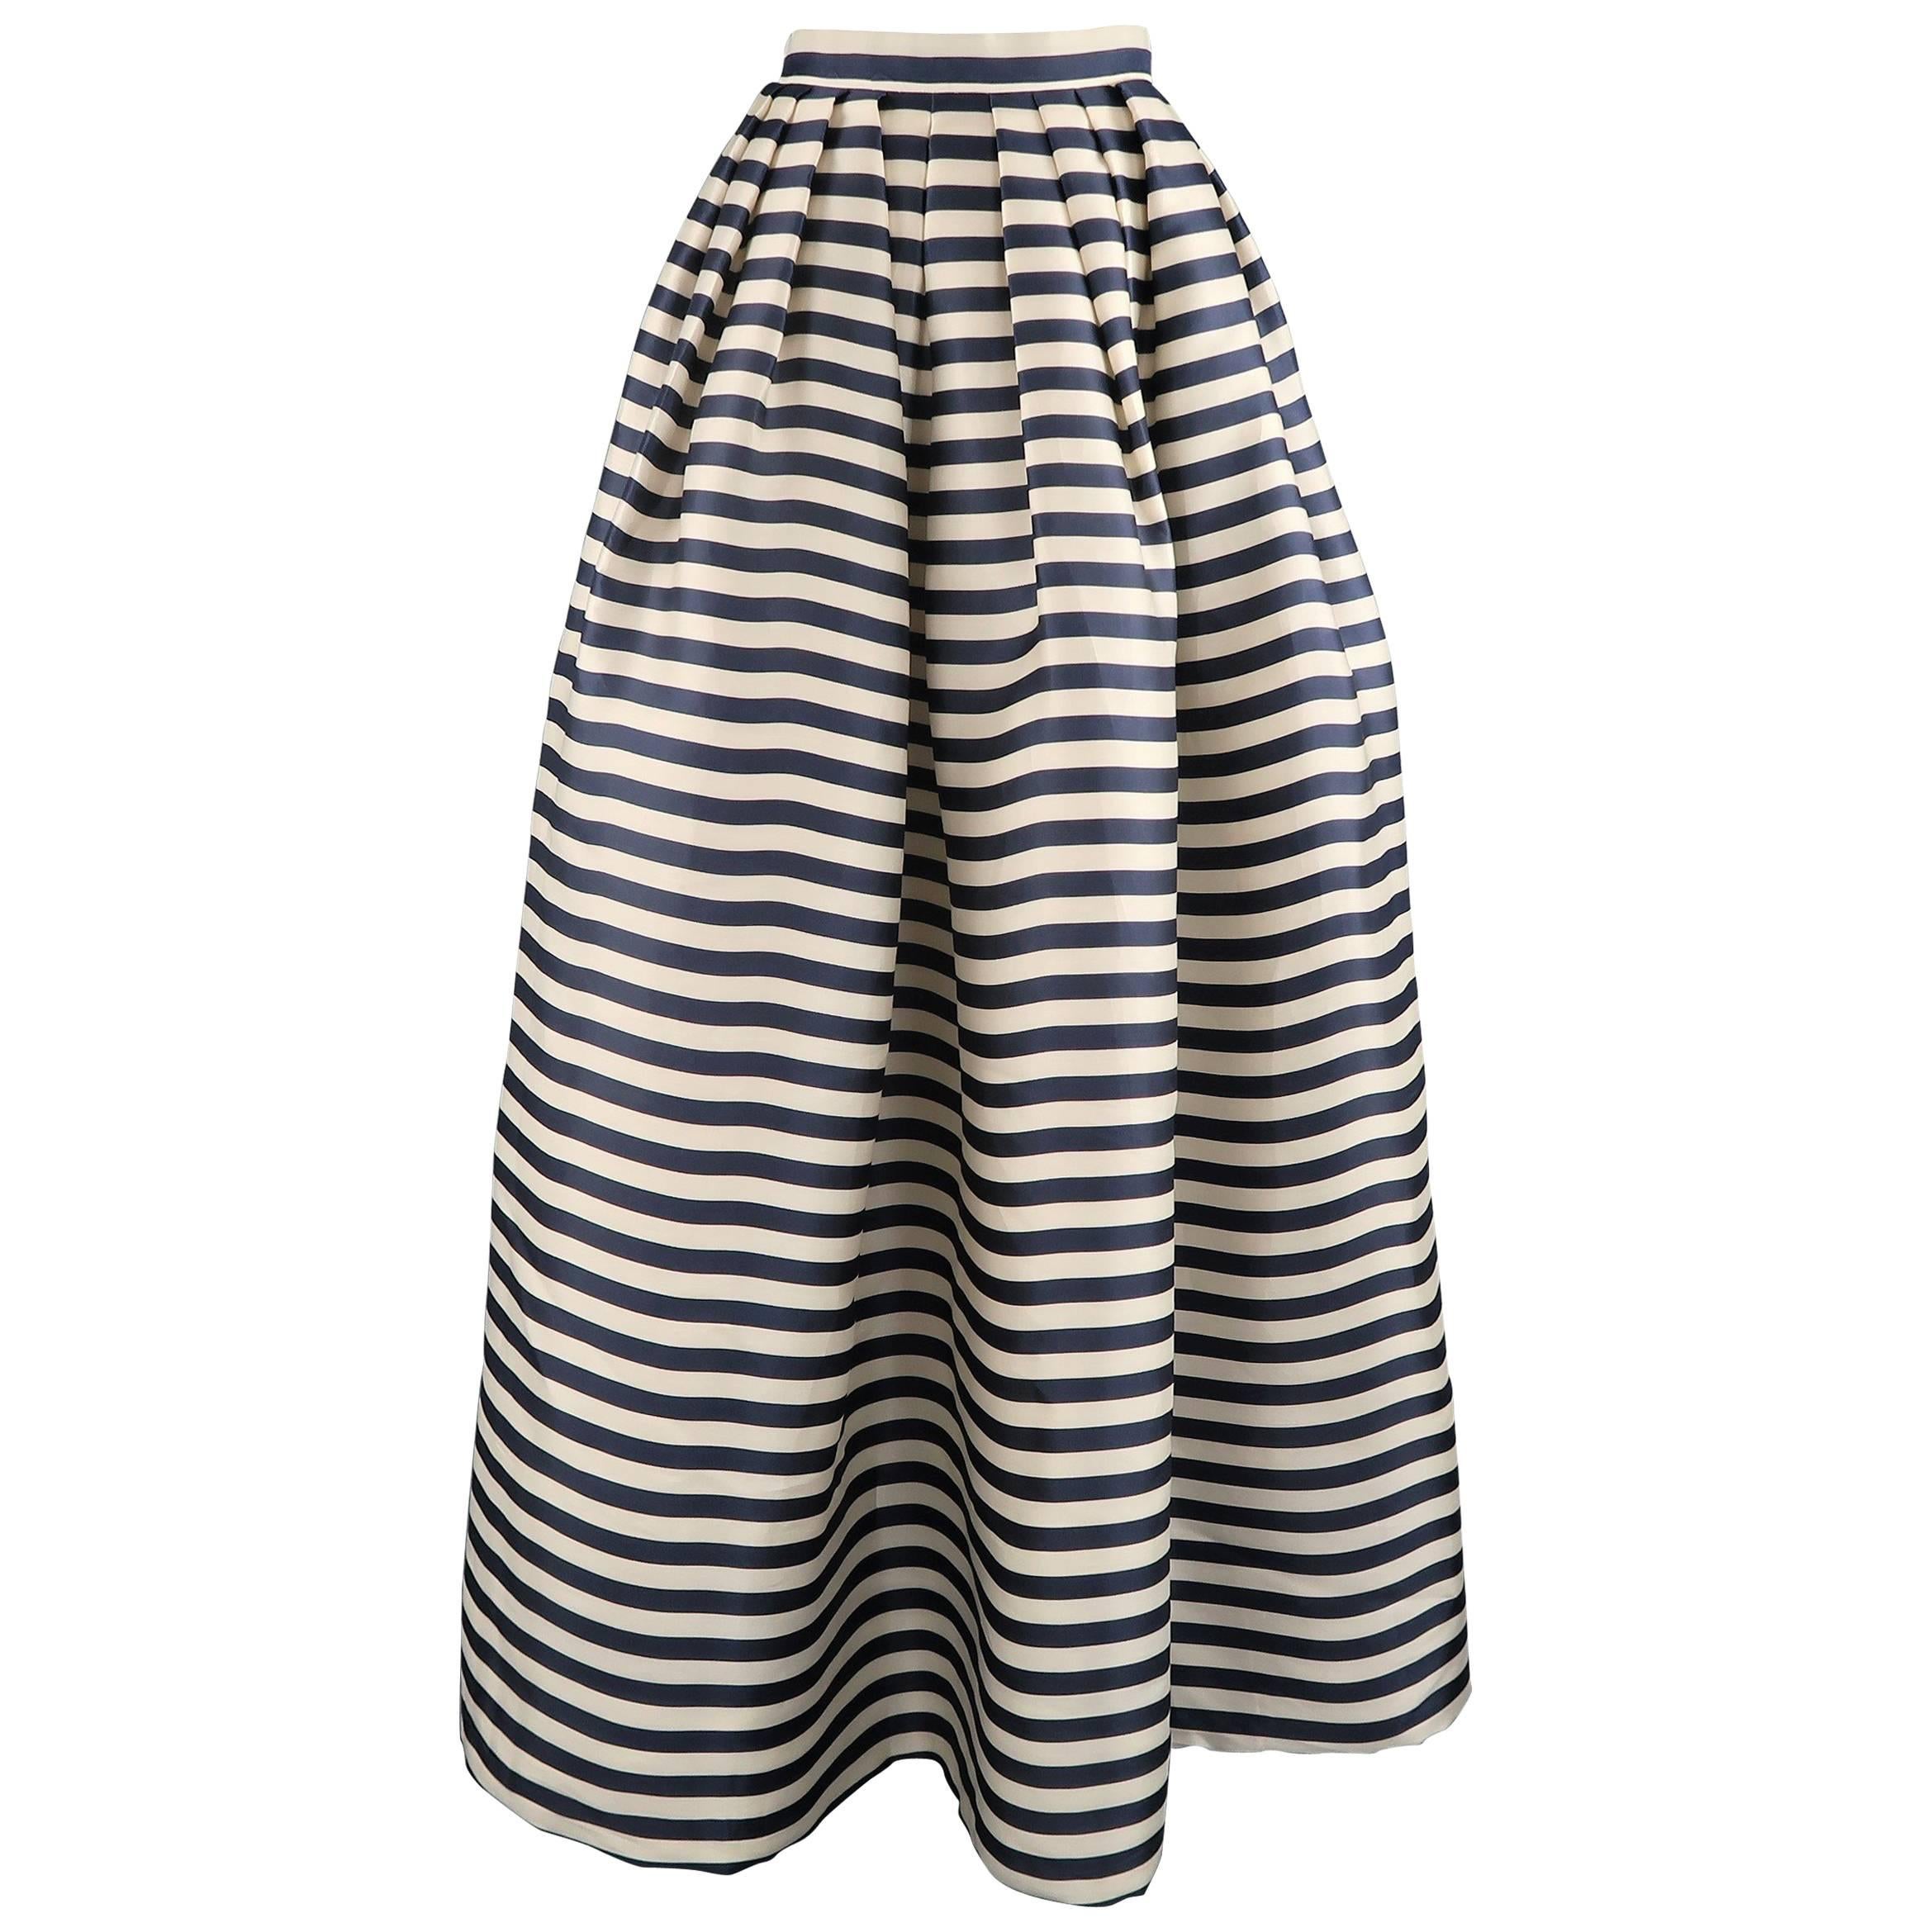 OSCAR DE LA RENTA Skirt Size 6 Cream & Navy Striped Silk Pleated Ball Gown Skirt